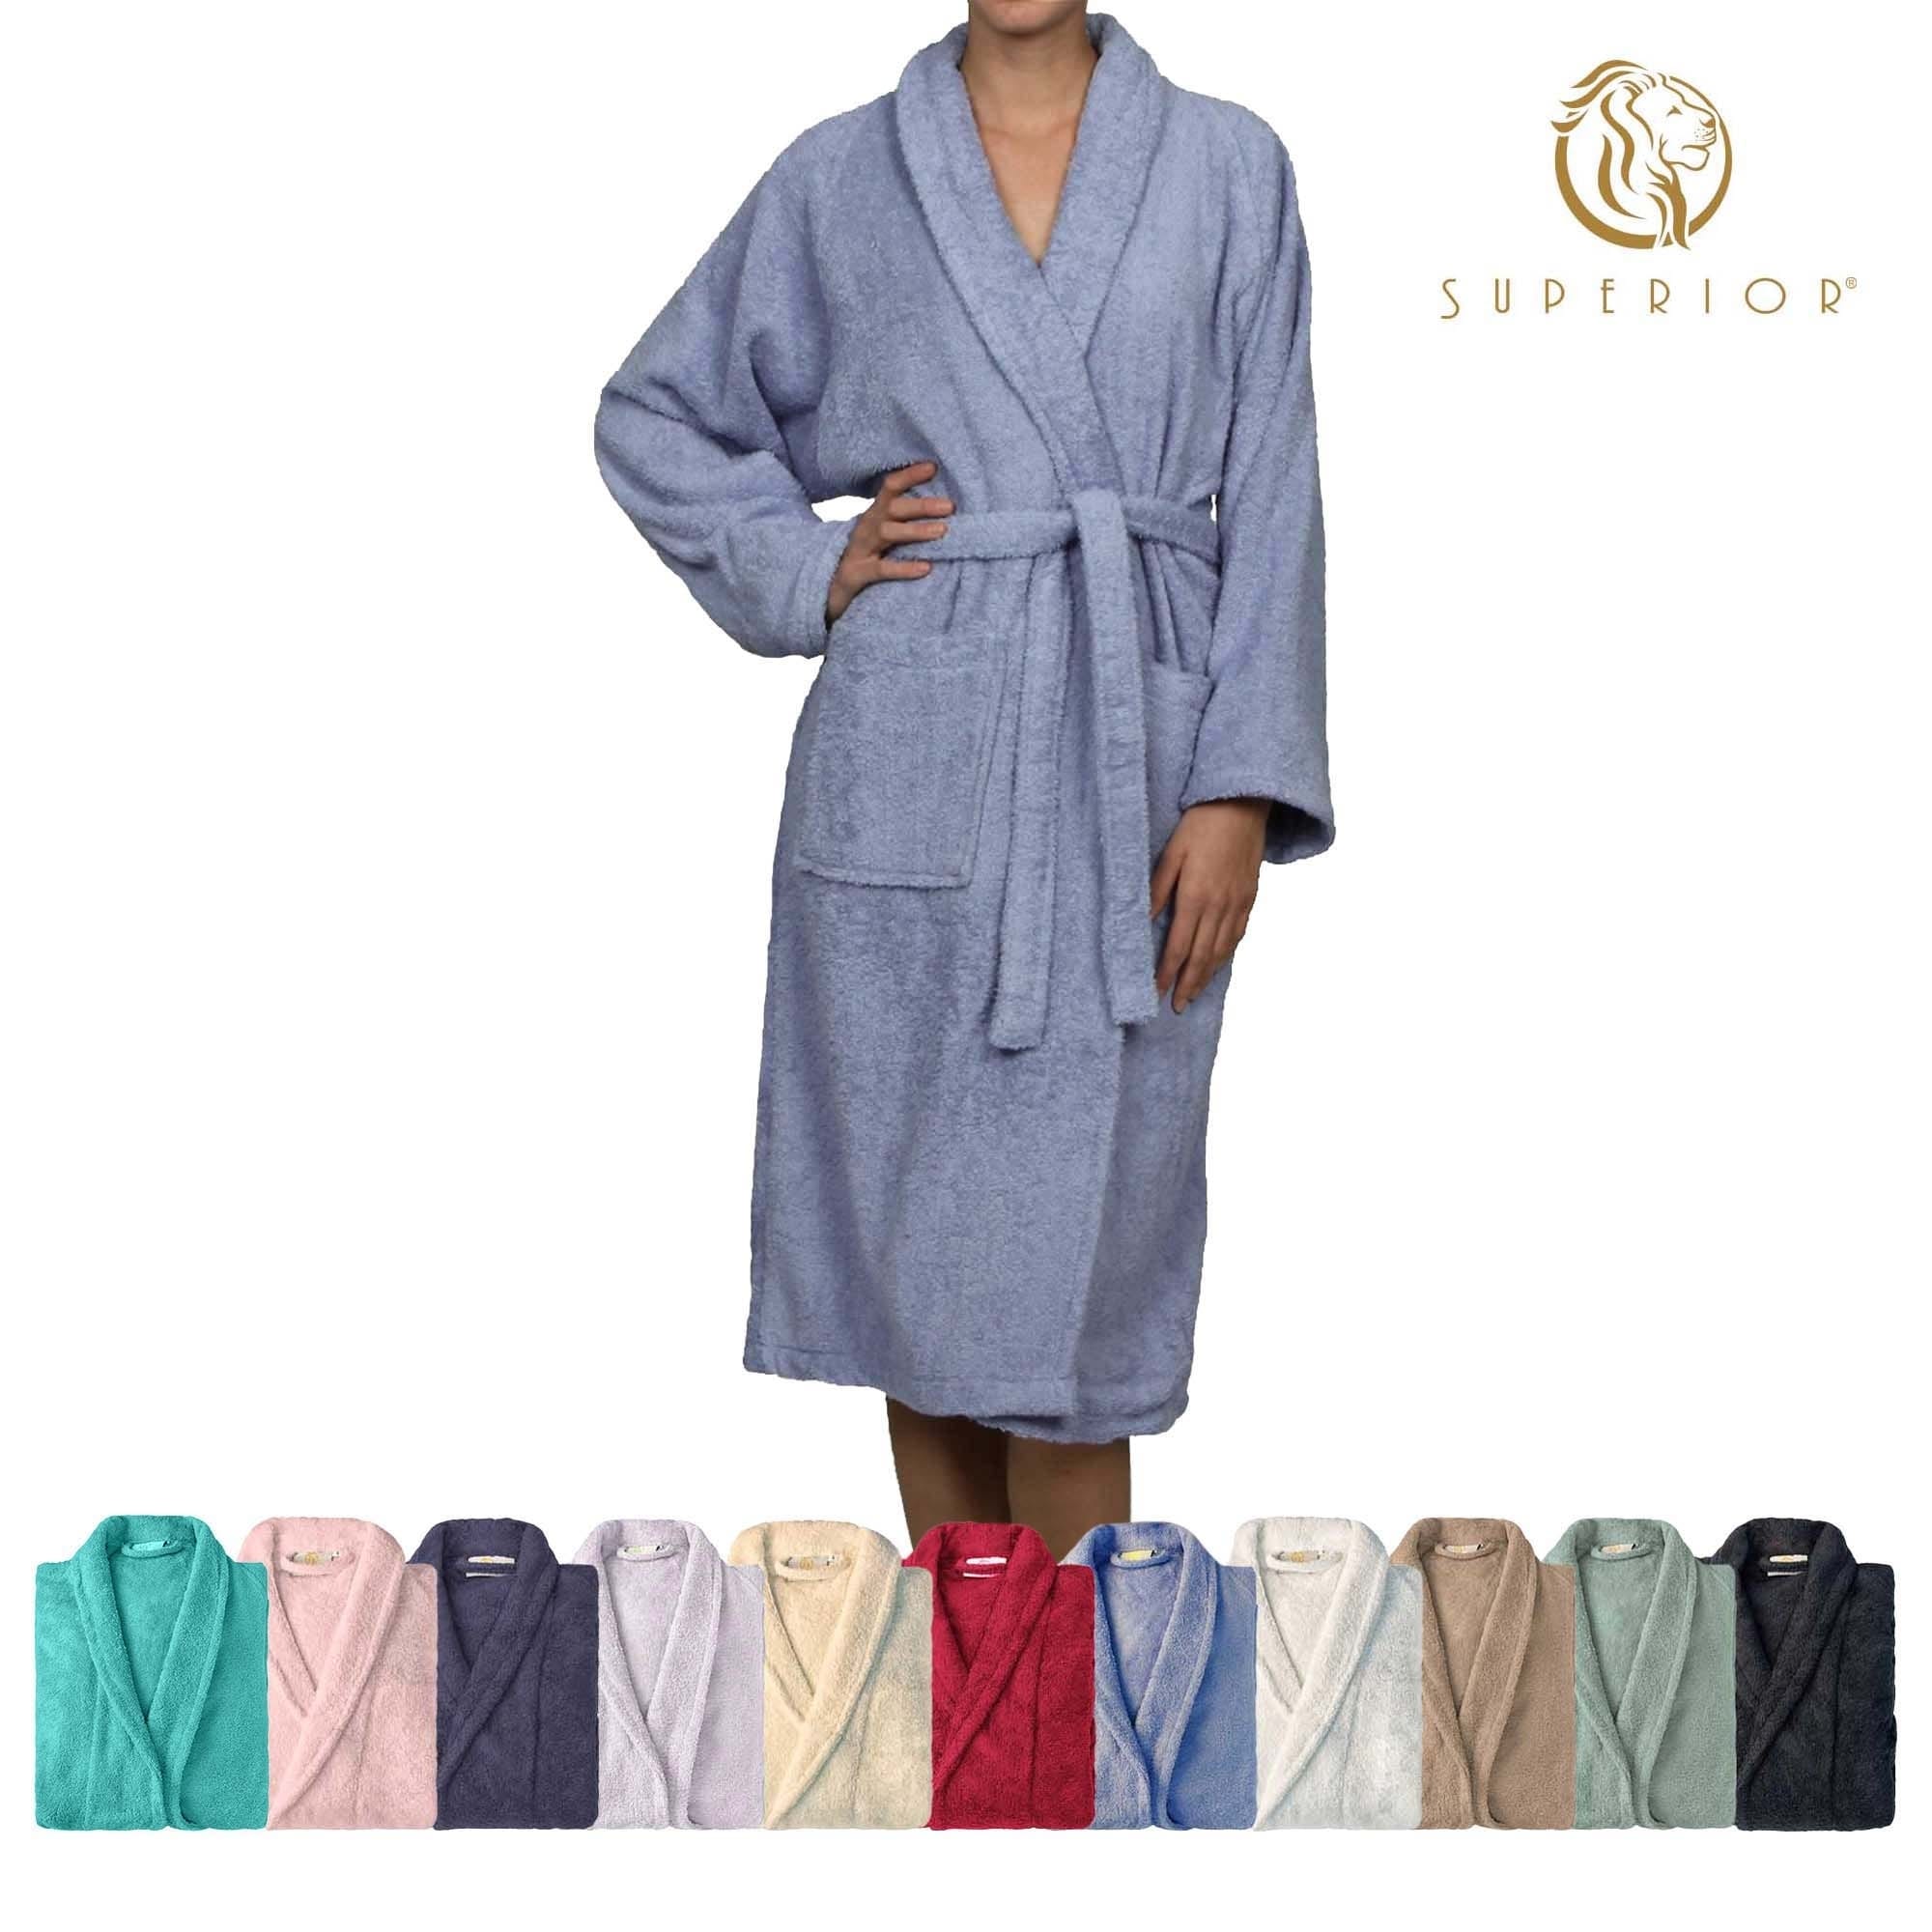 Luxury Bathrobes :: Turkish Robes :: 100% Turkish Cotton Wine Red Terry  Kimono Bathrobe - Wholesale bathrobes, Spa robes, Kids robes, Cotton robes,  Spa Slippers, Wholesale Towels